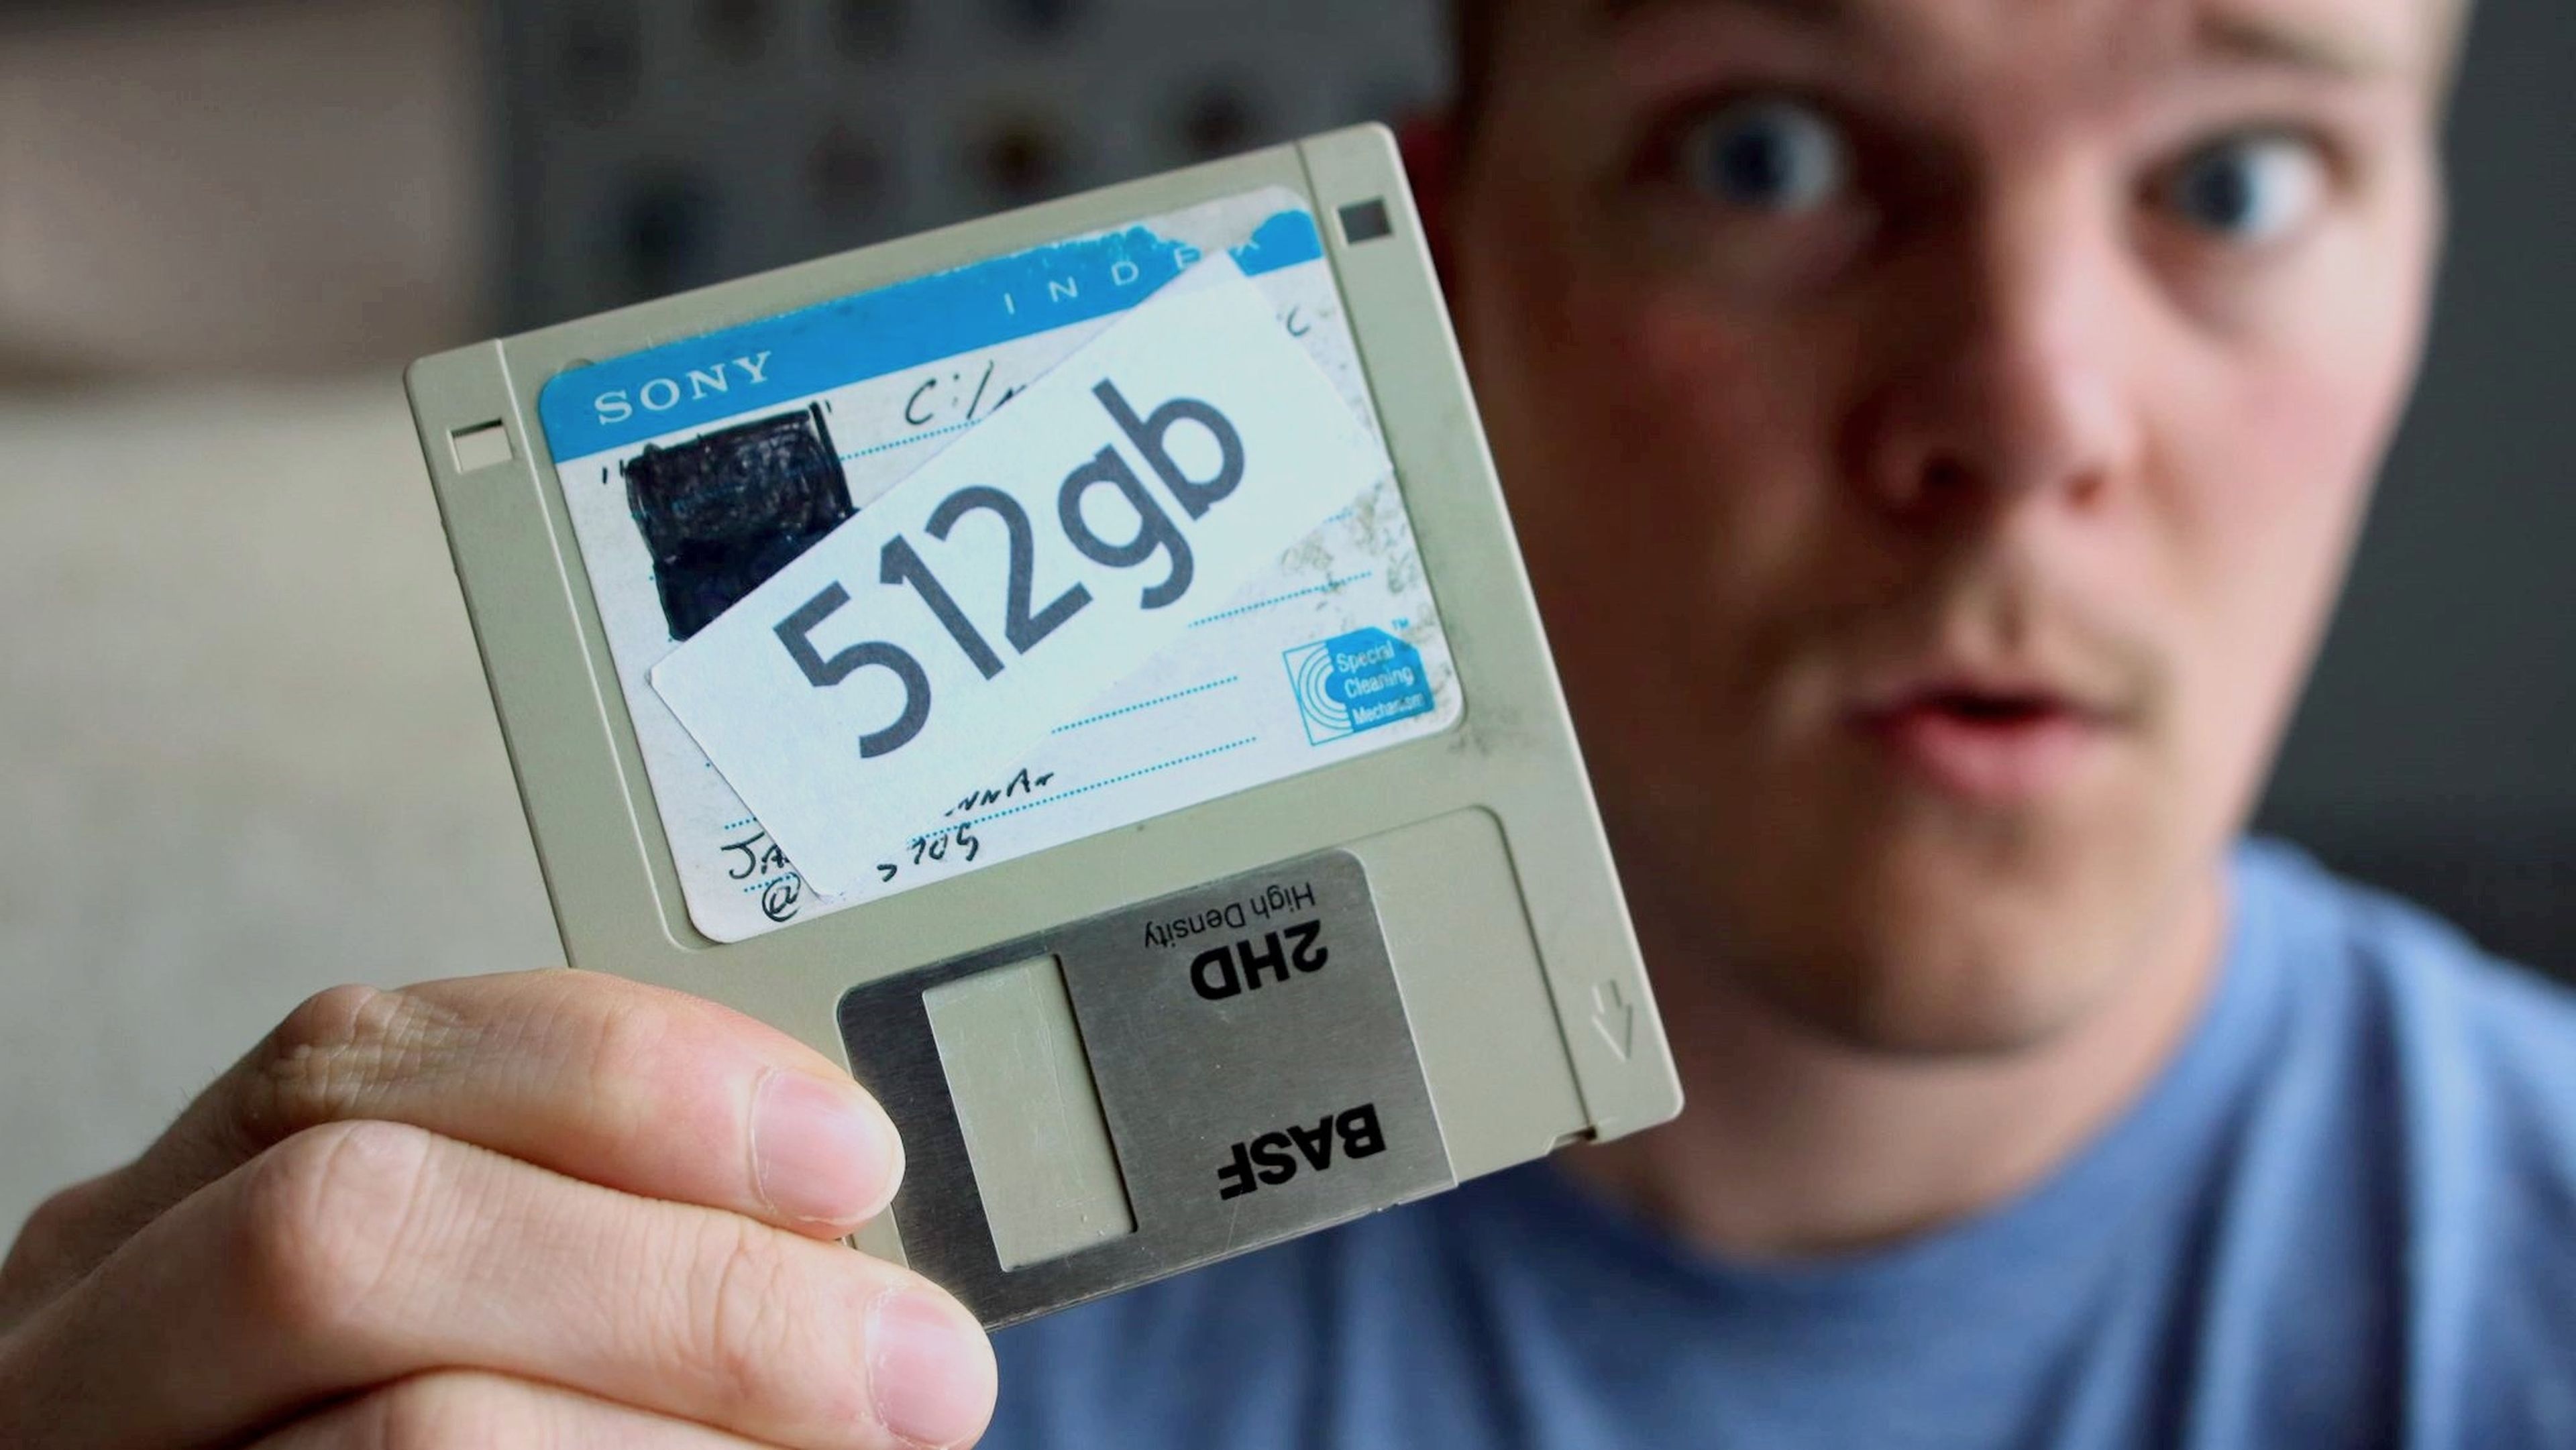 Consiguen que un floppy disk almacene 512 GB de datos, aunque podría almacenar hasta 28 TB